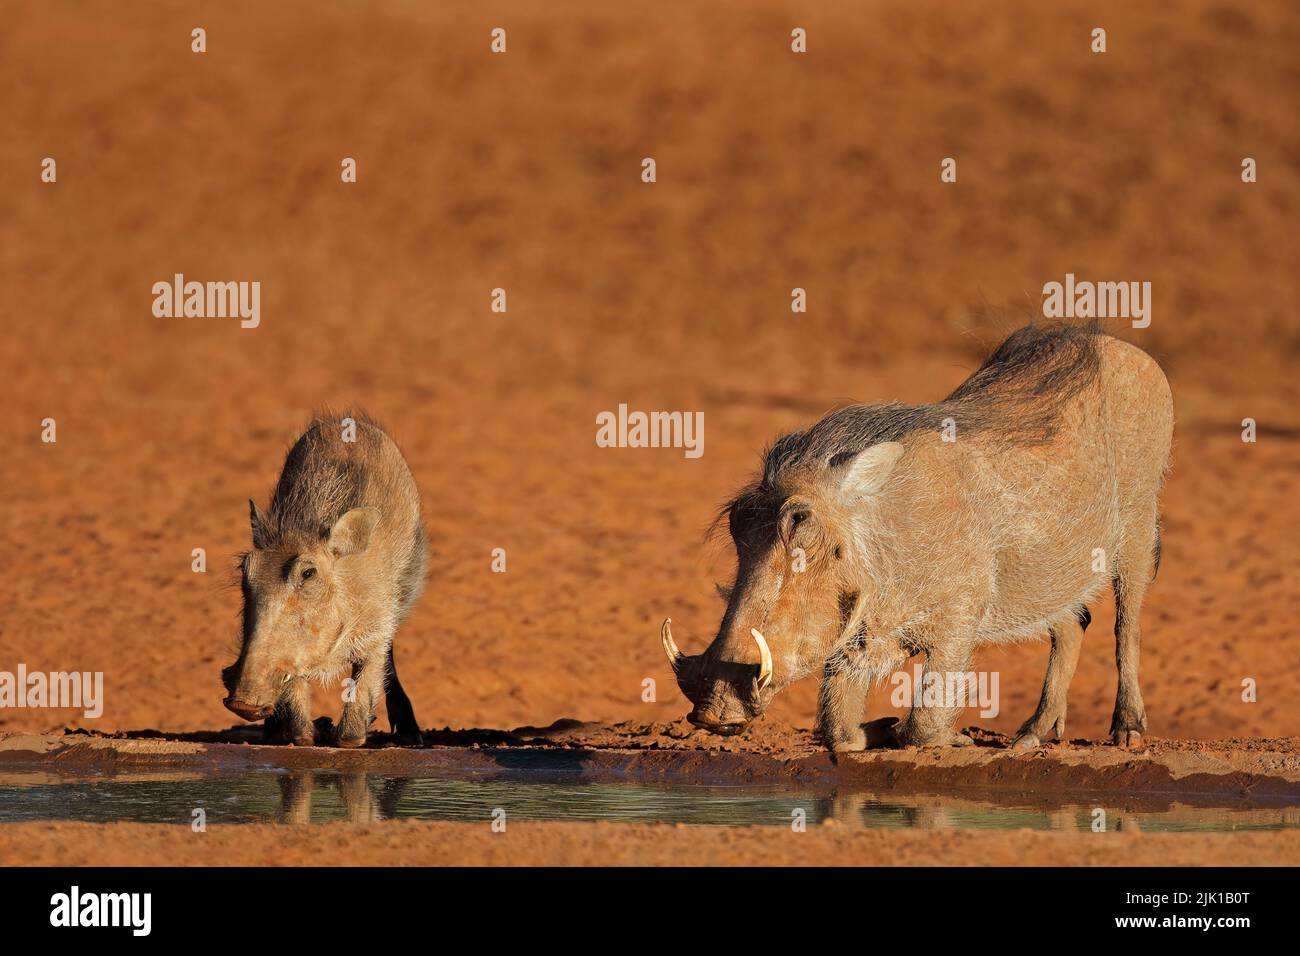 Warthogs (Phacochoerus africanus) bebiendo en un pozo de agua, Sudáfrica Foto de stock